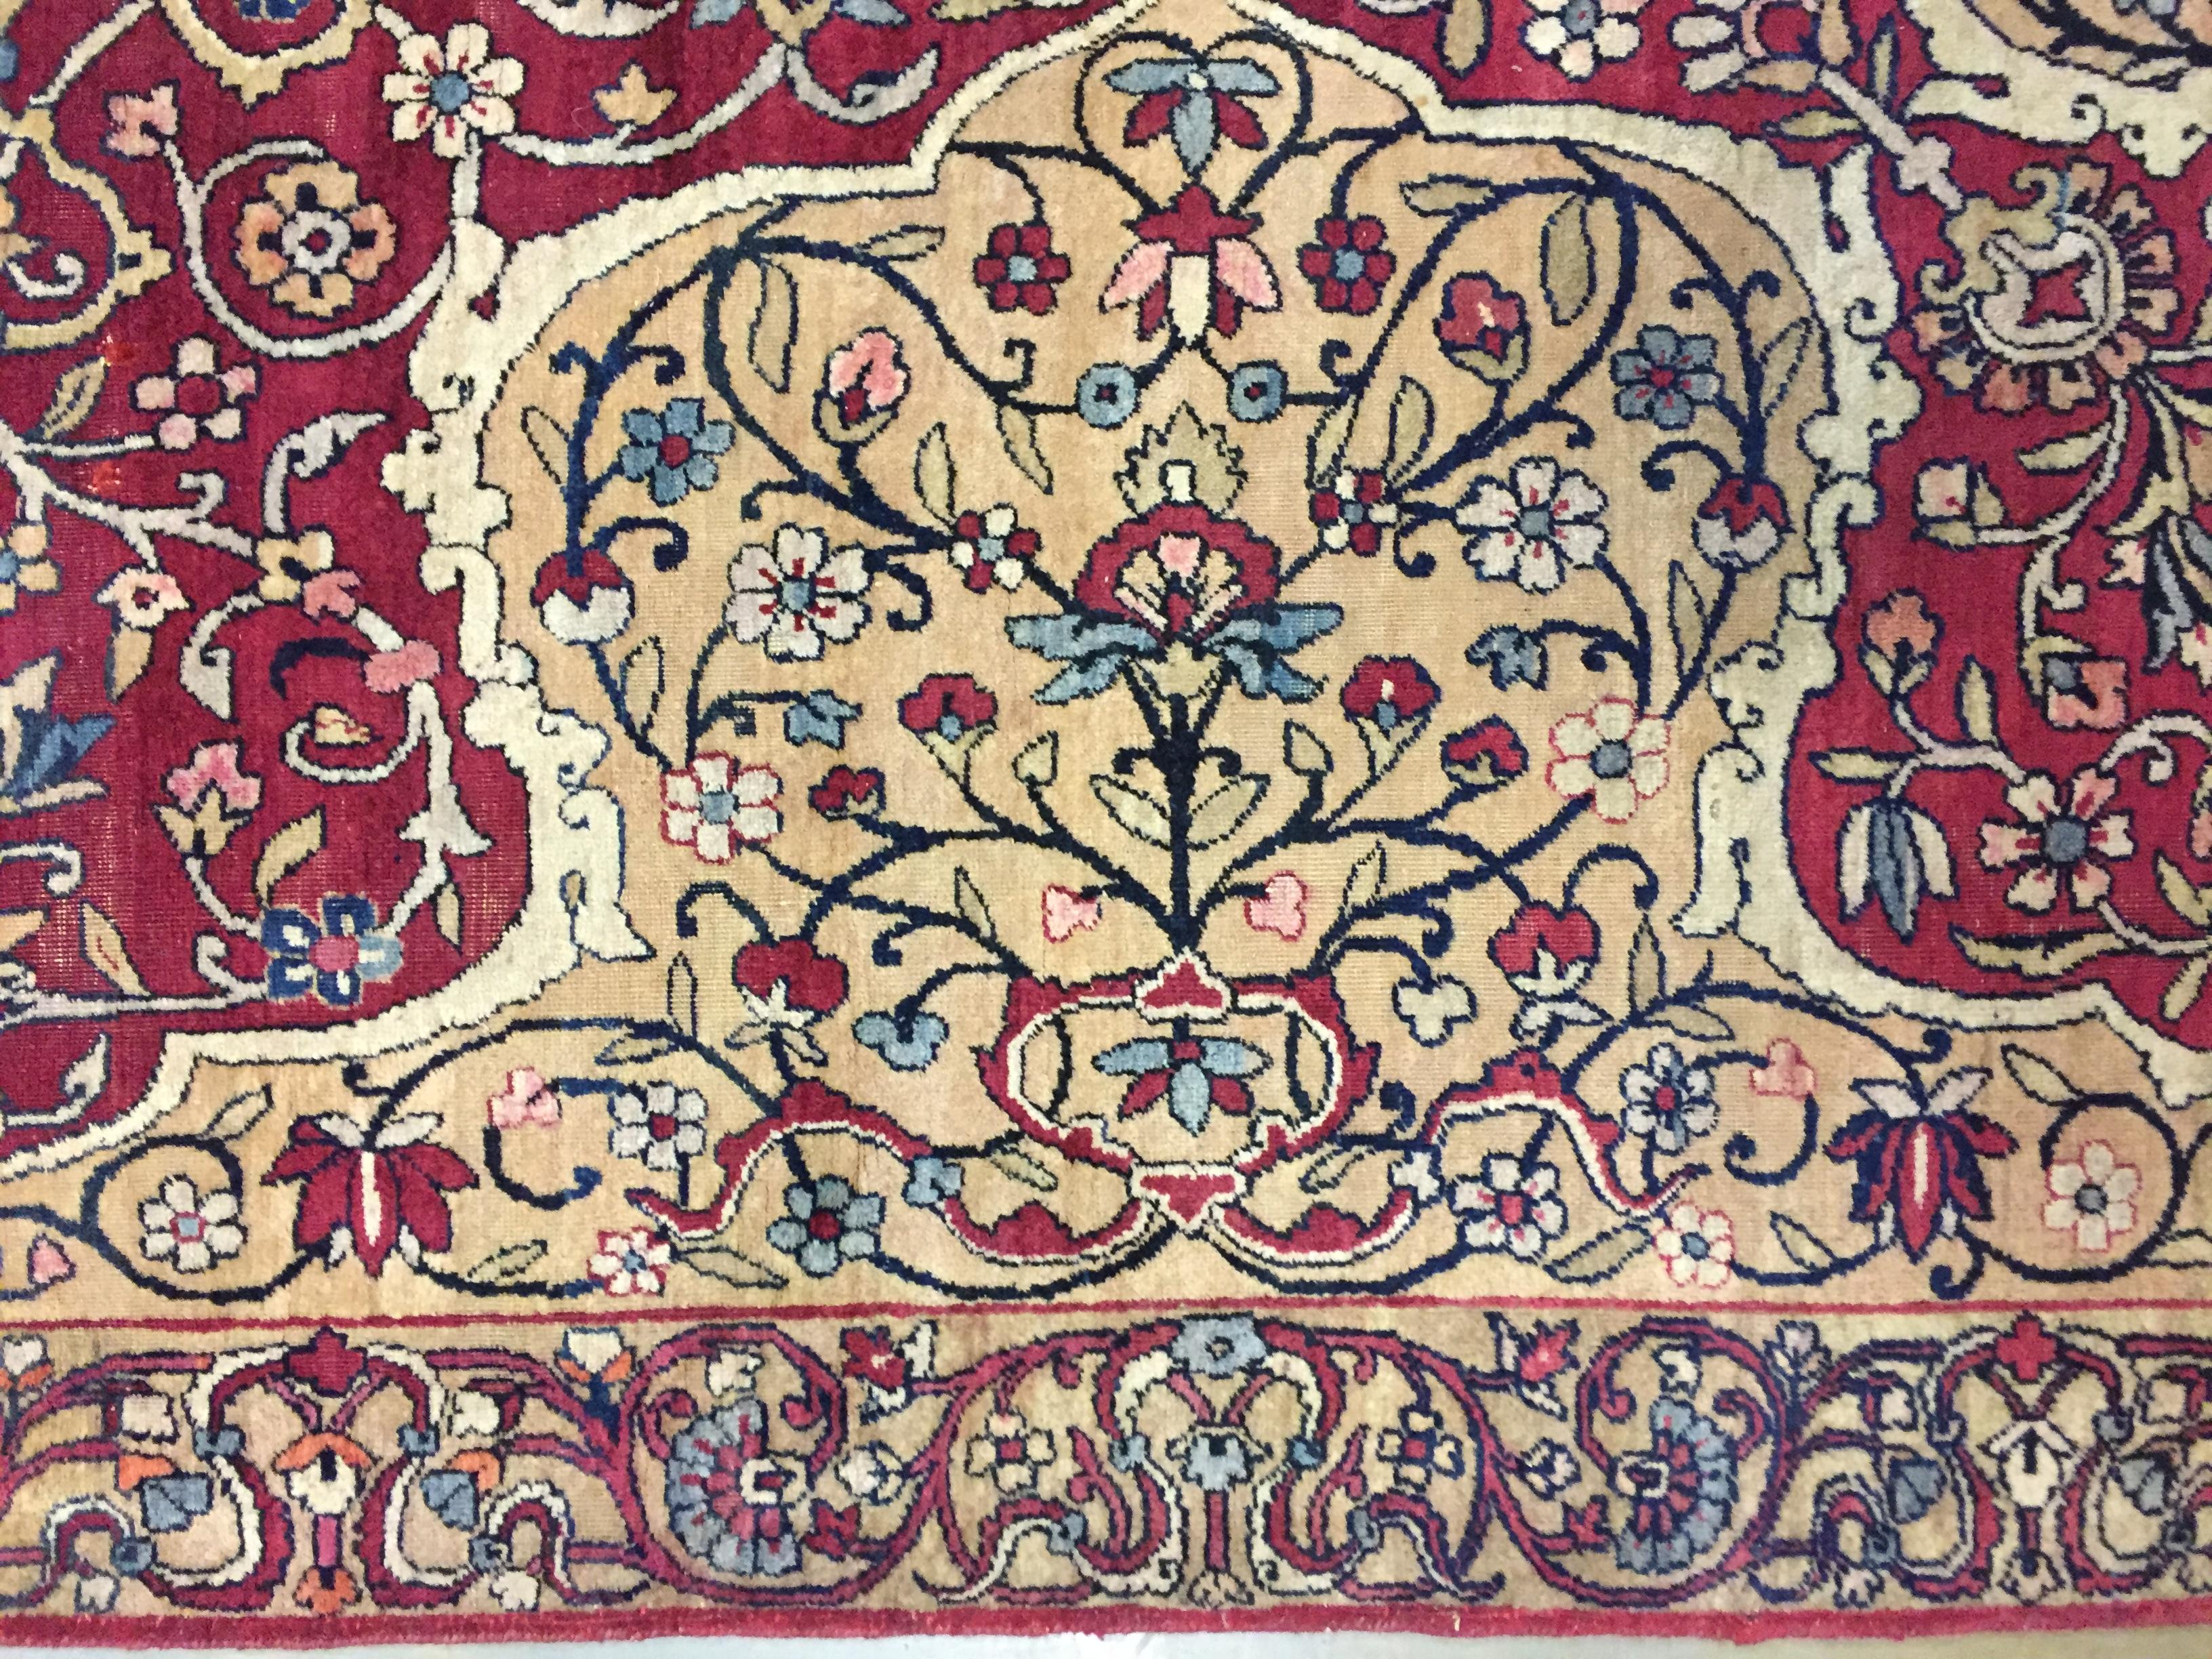 Hand-Woven Antique Oversize Persian Kerman Rug Carpet, 16'4 x 21'4 For Sale